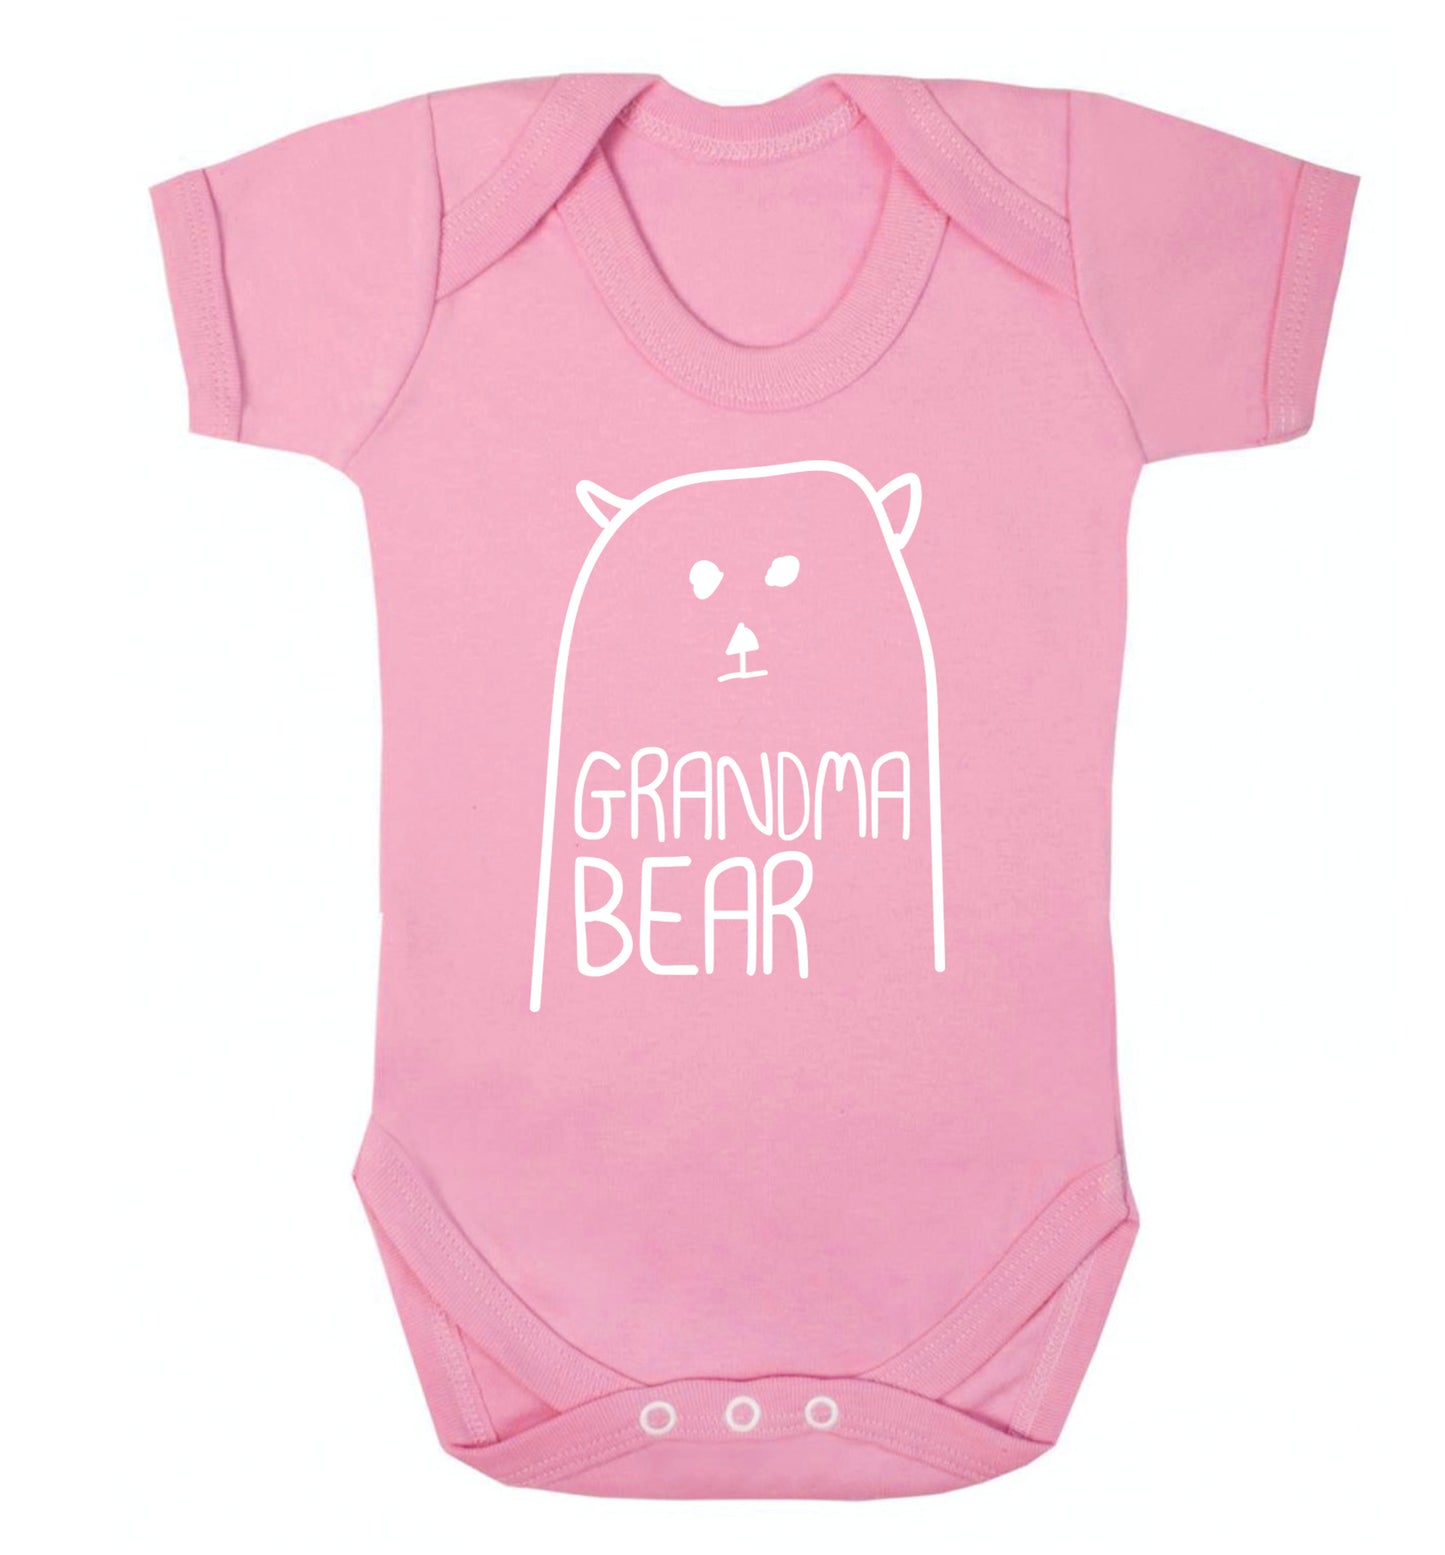 Grandma bear Baby Vest pale pink 18-24 months